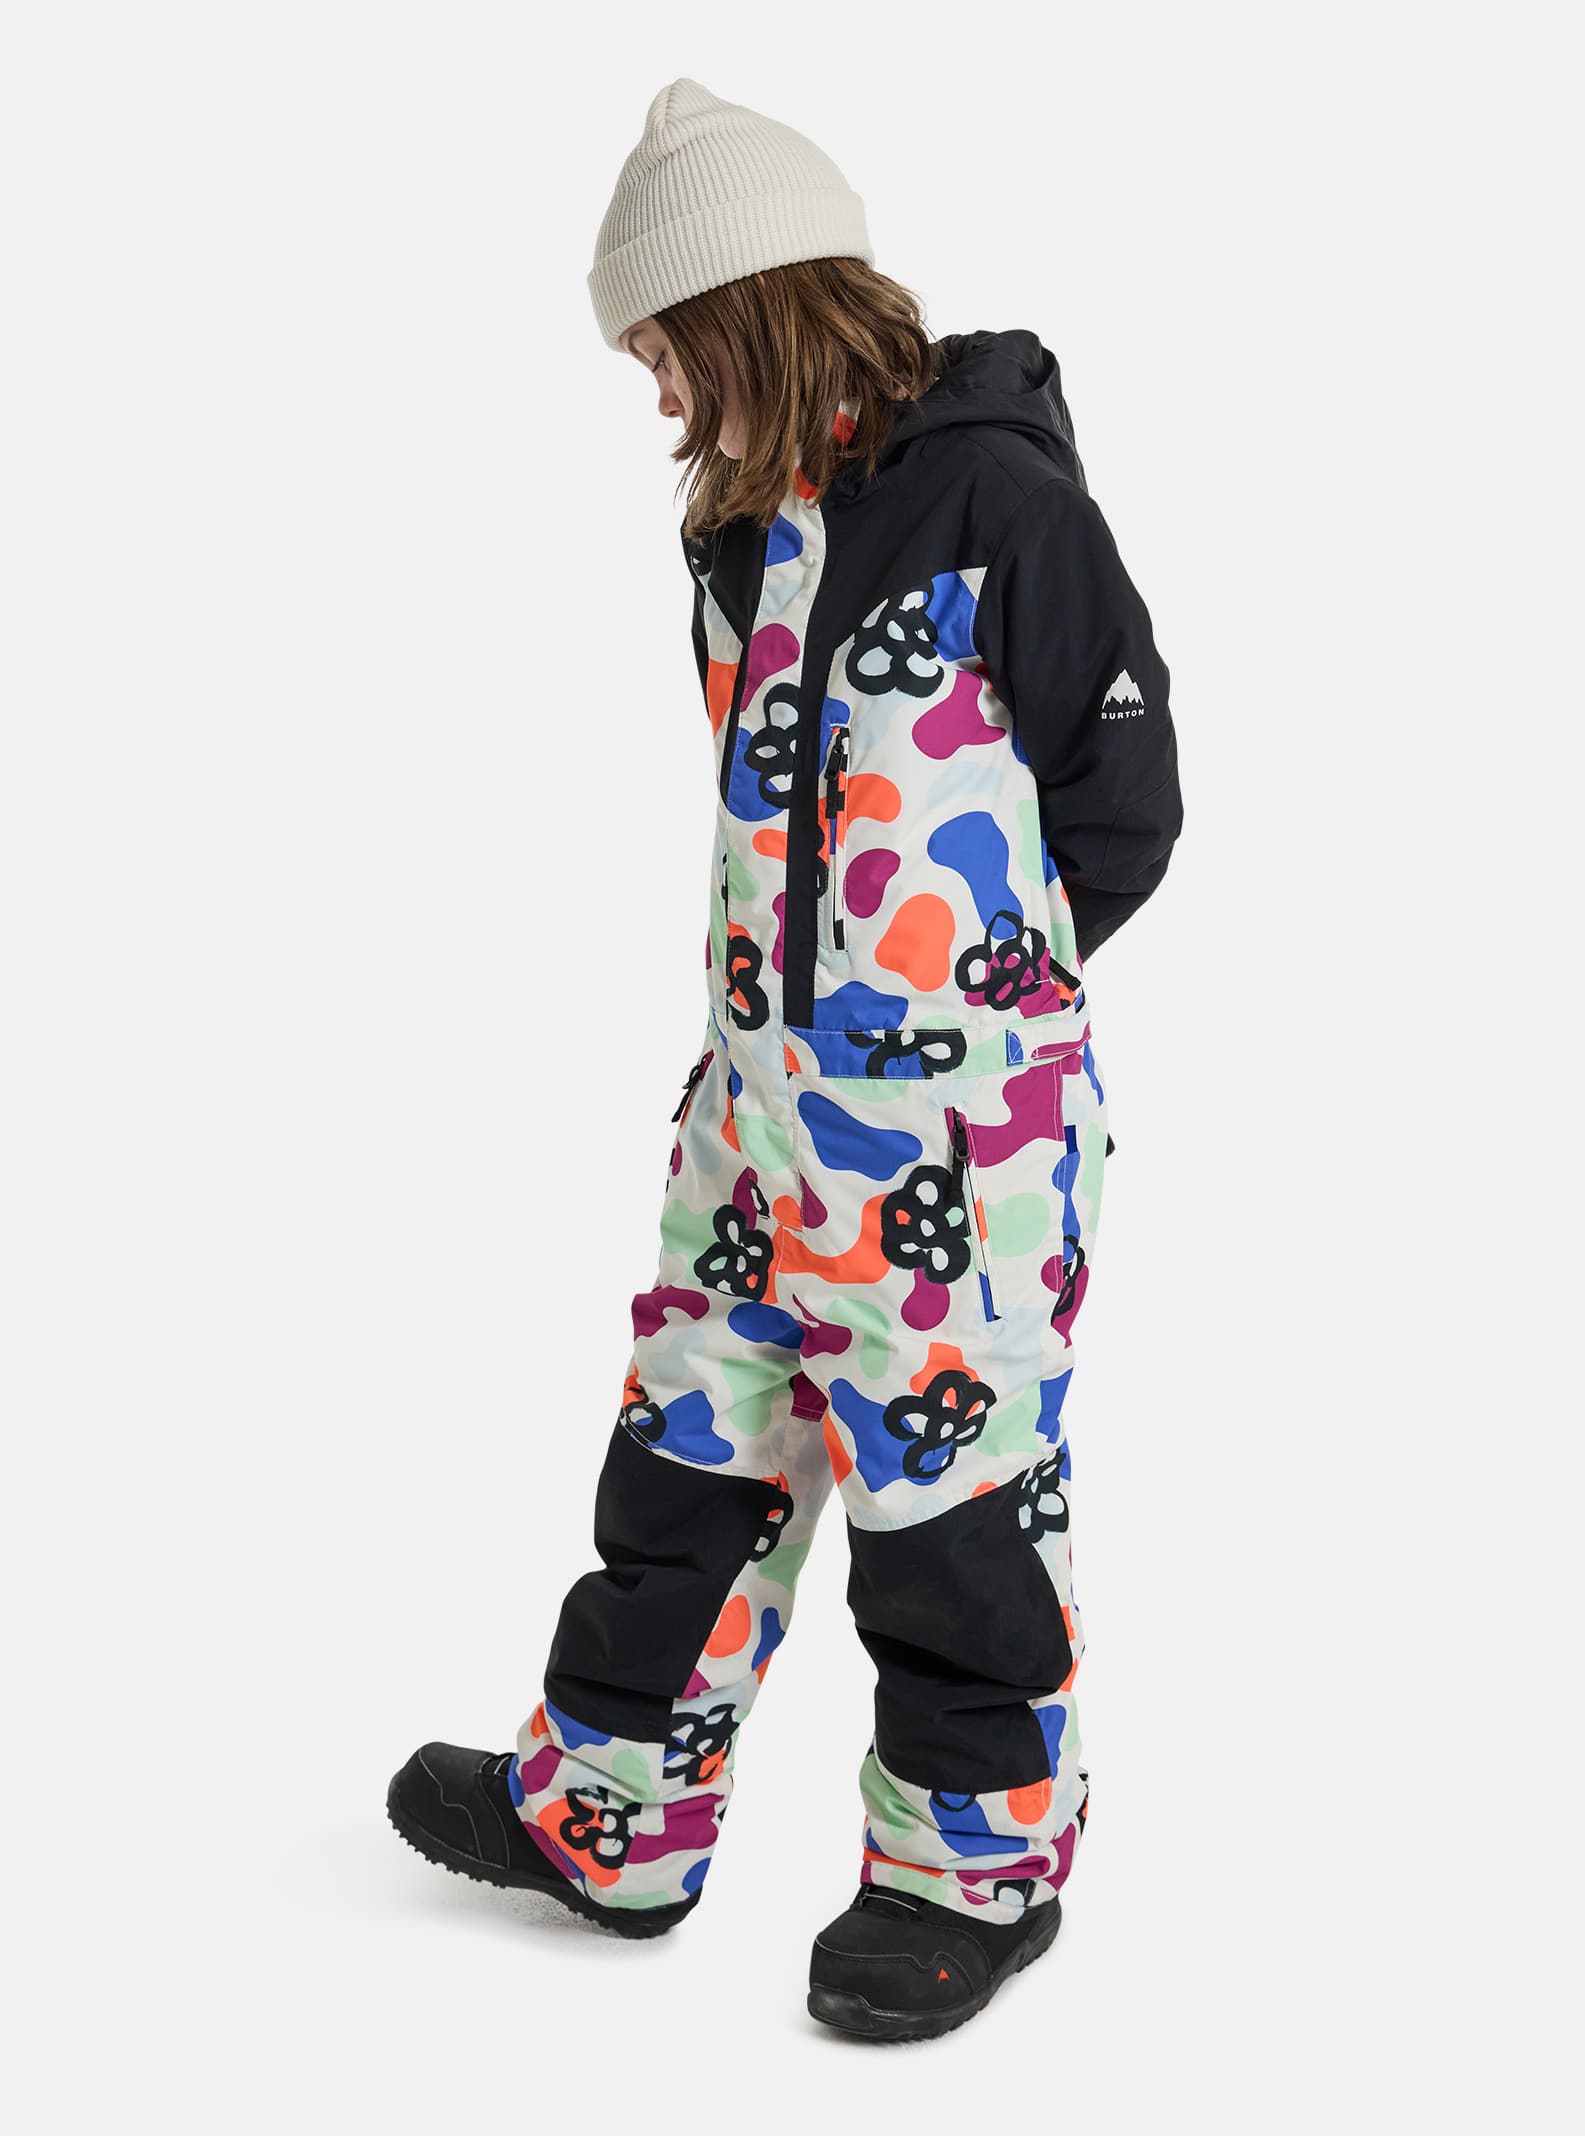 UDIY Kids Winter Warm Ski Bibs Snow Pants for Boys Girls 